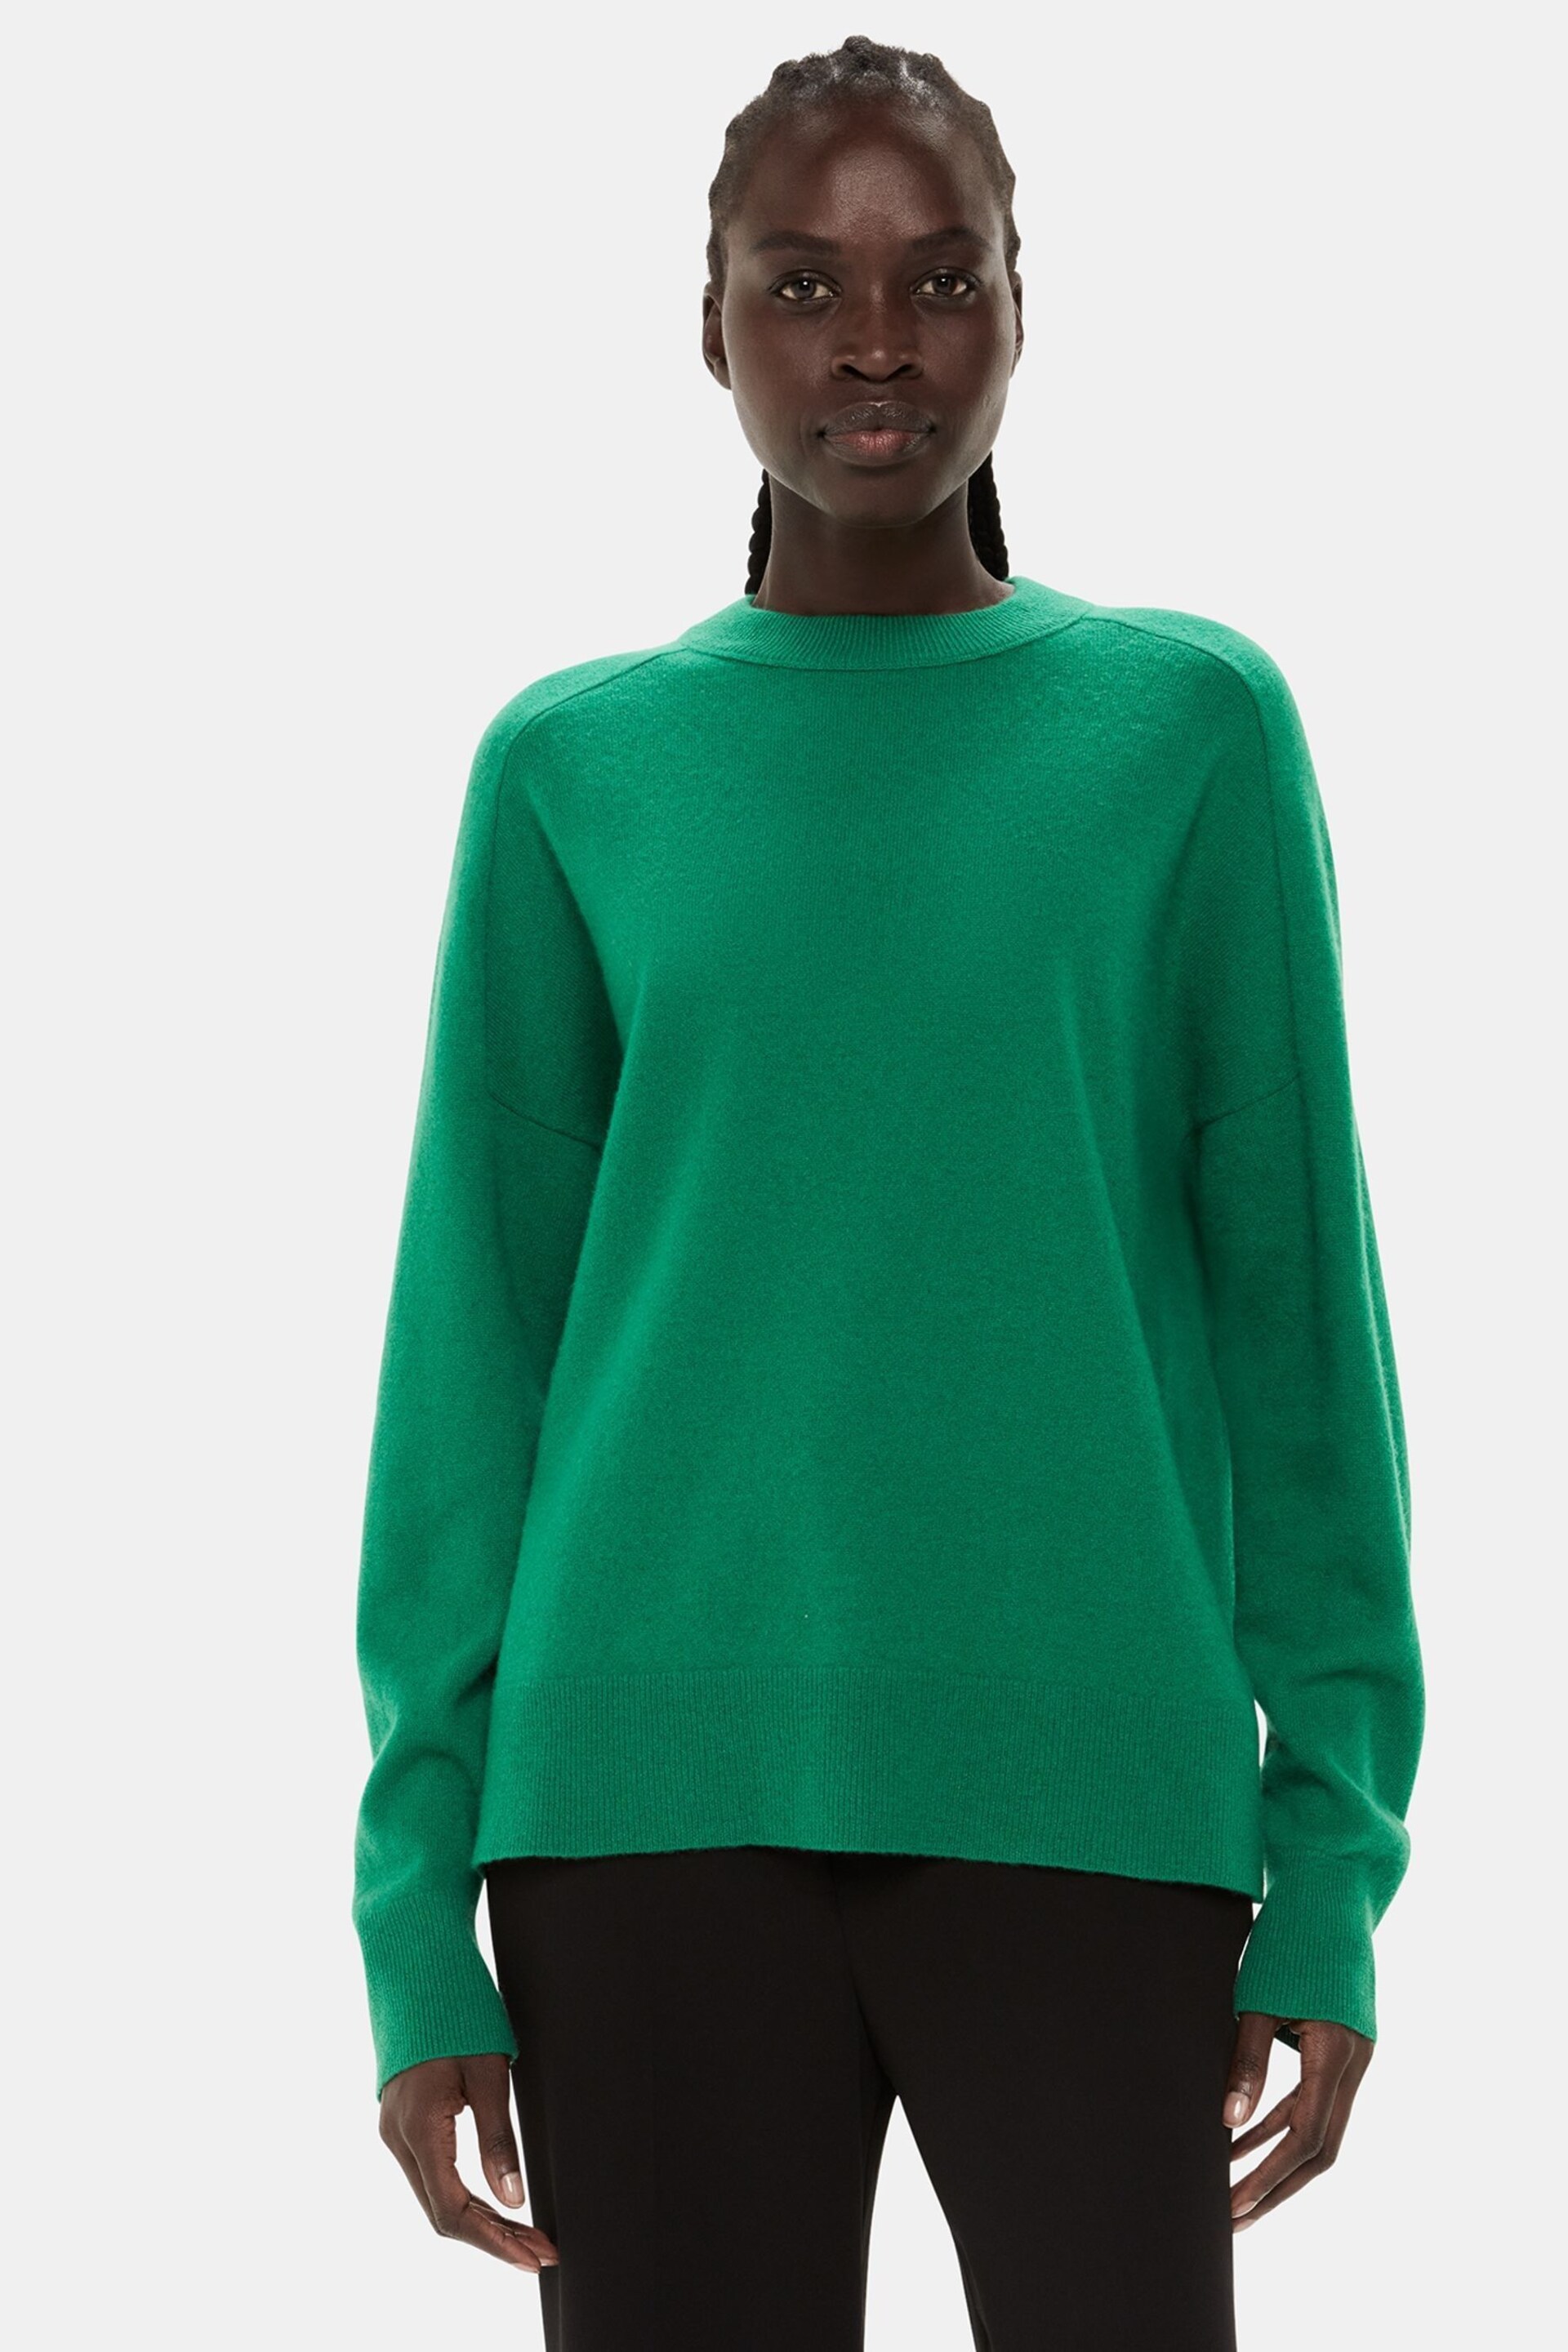 Whistles Green Wool Boyfriend Sweater - Image 1 of 5